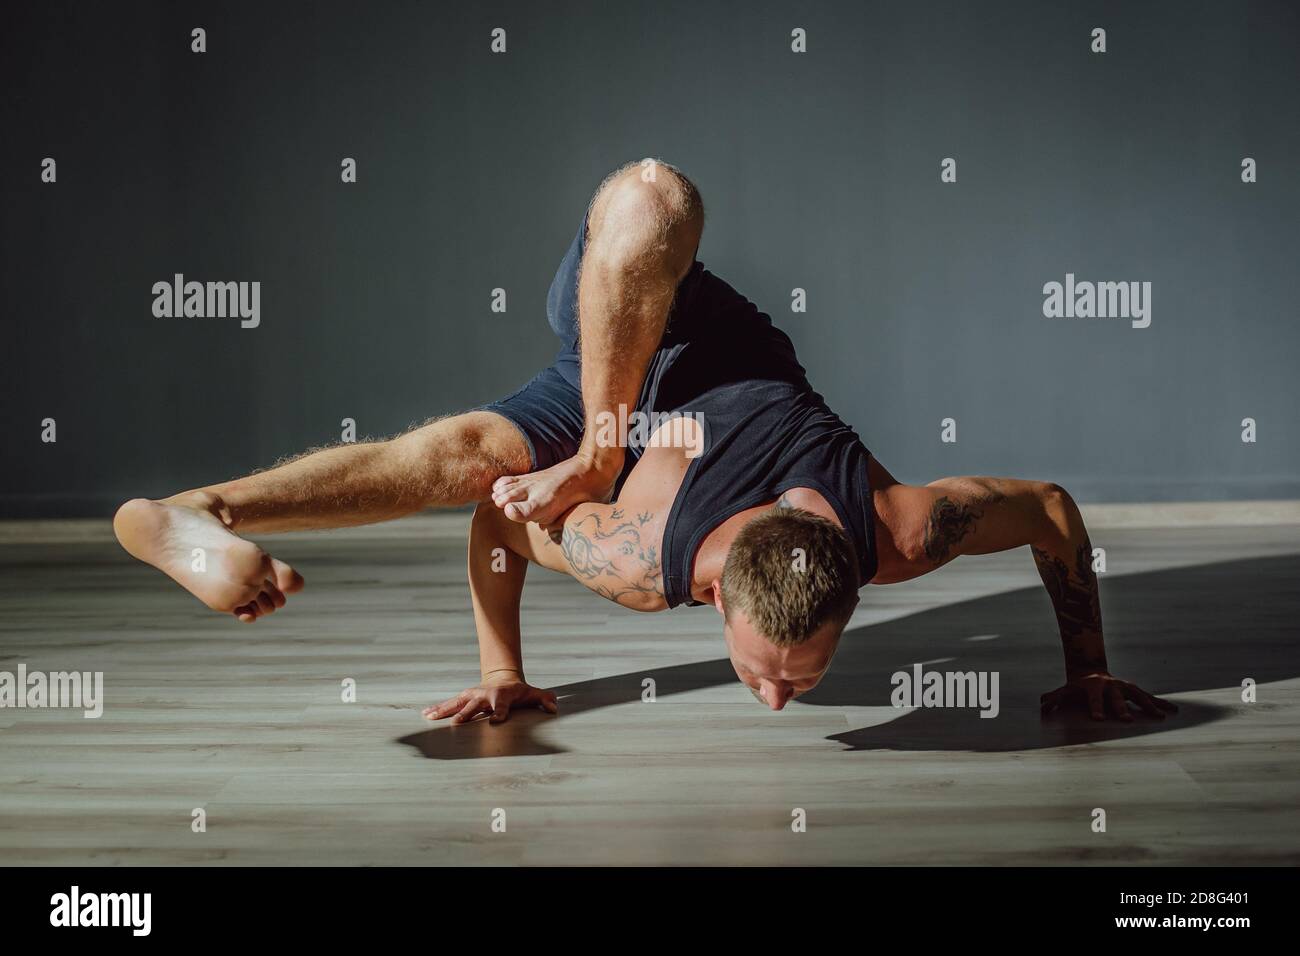 350+ Aerial Yoga Poses to Plan Yoga Sequences | Tummee.com